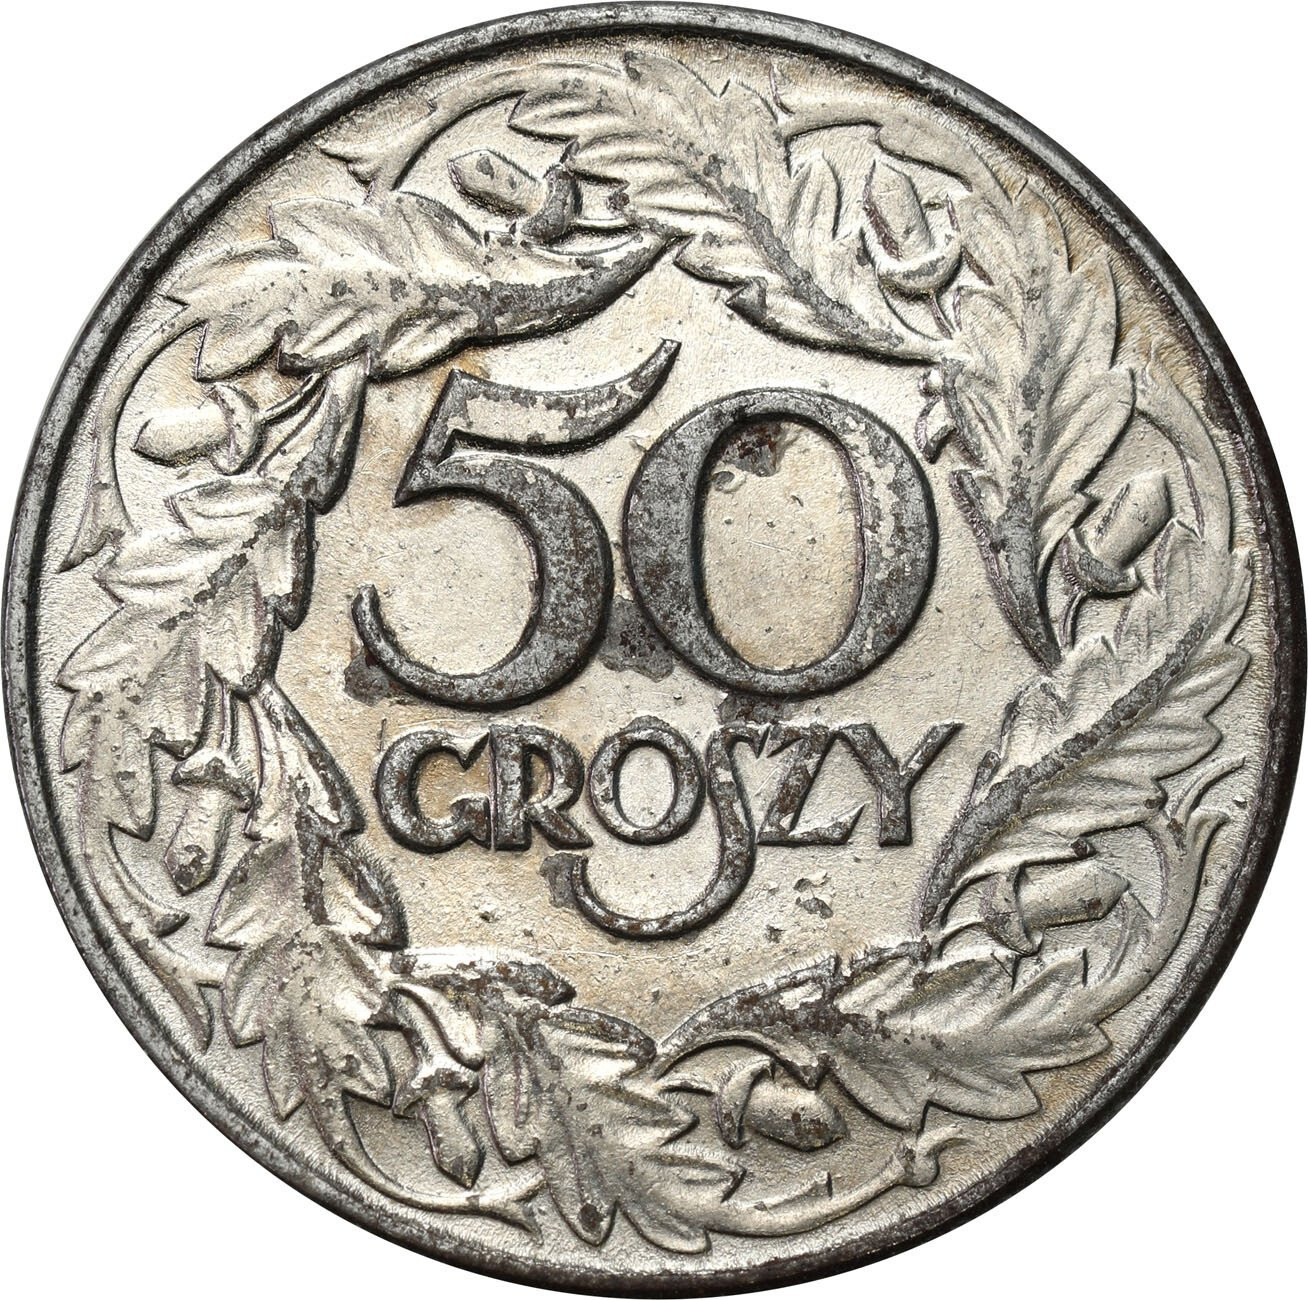 Generalna Gubernia. 50 groszy 1938